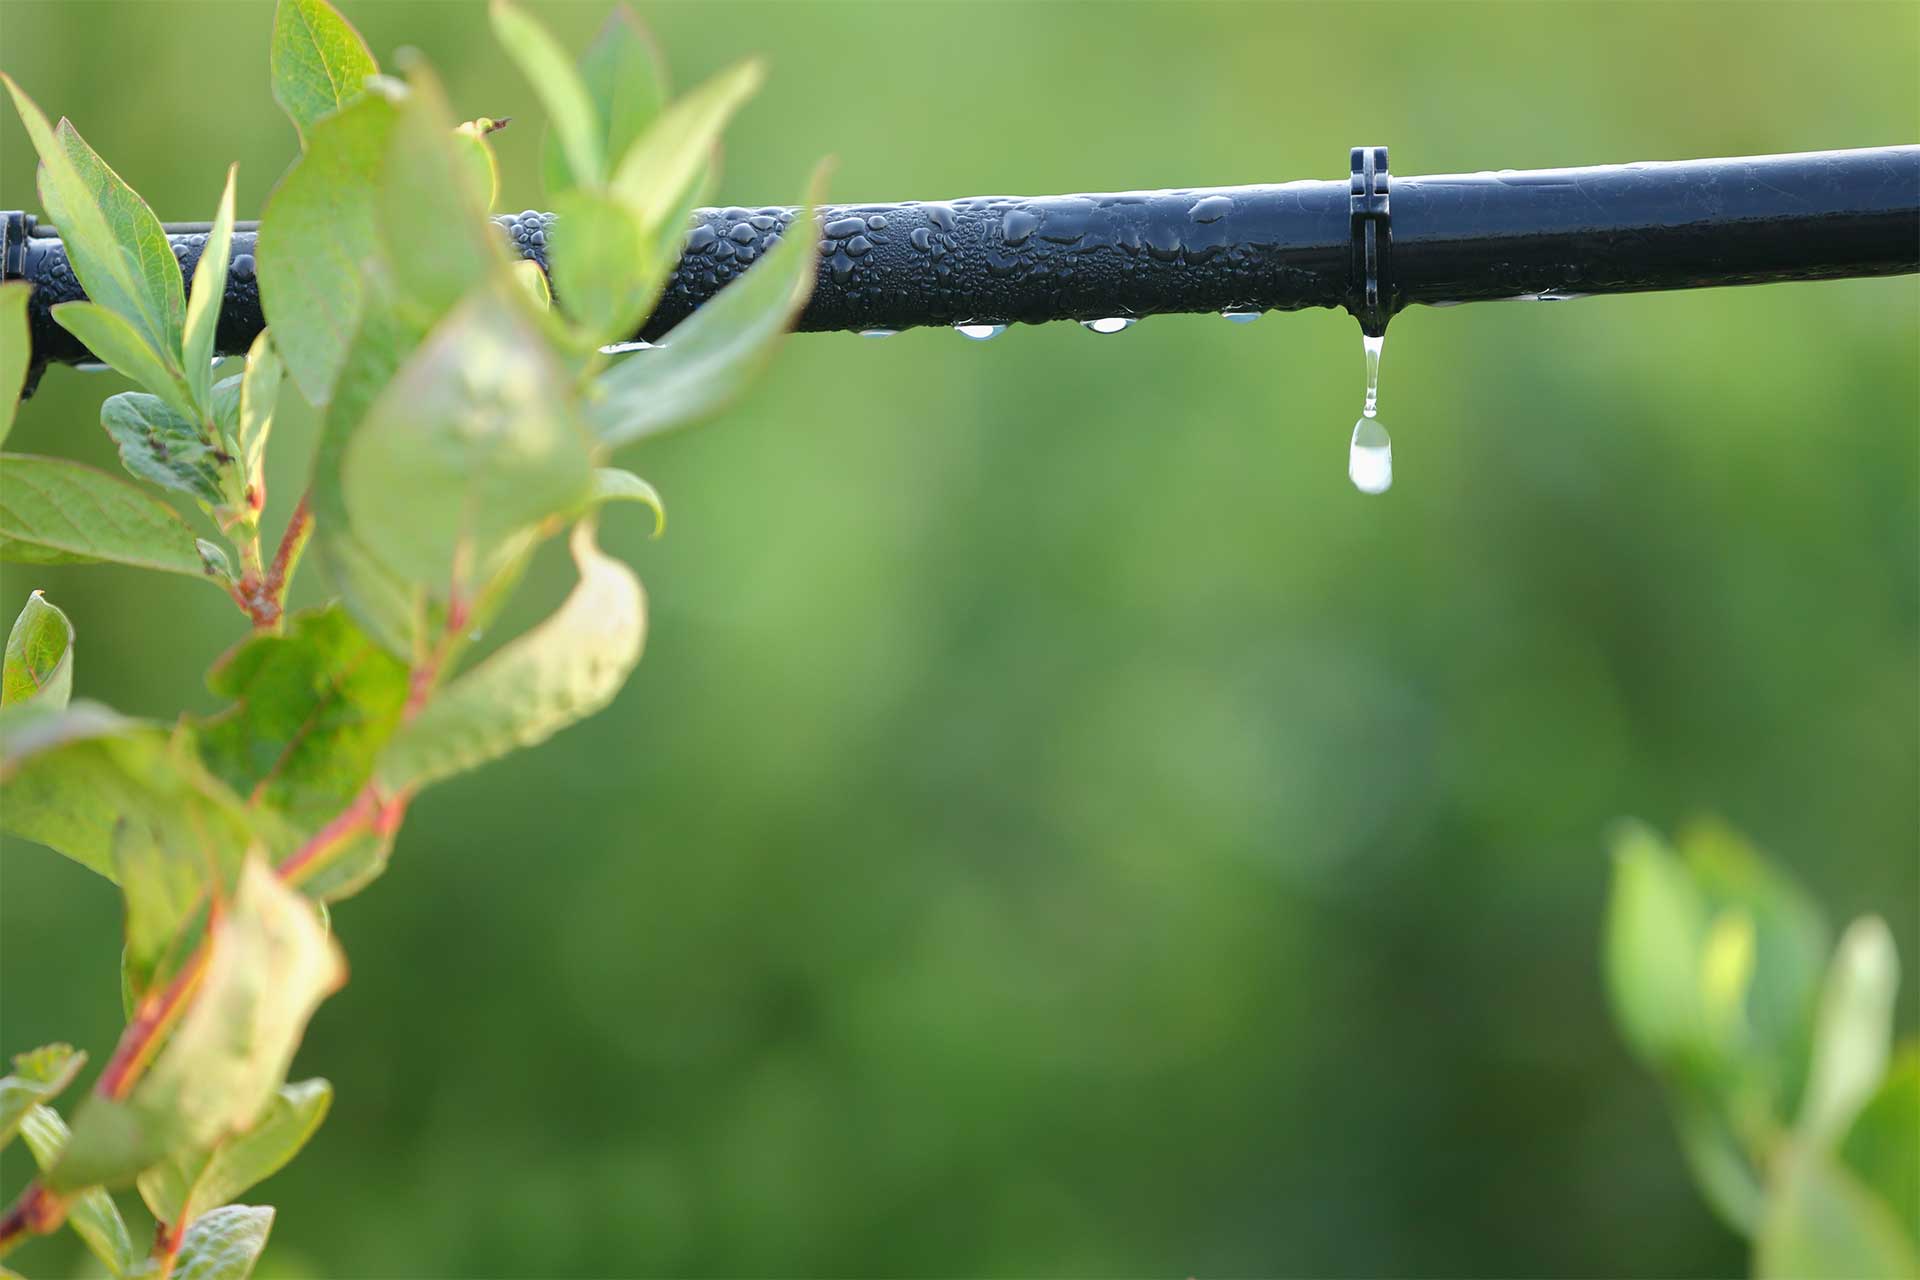  drip irrigation system up close